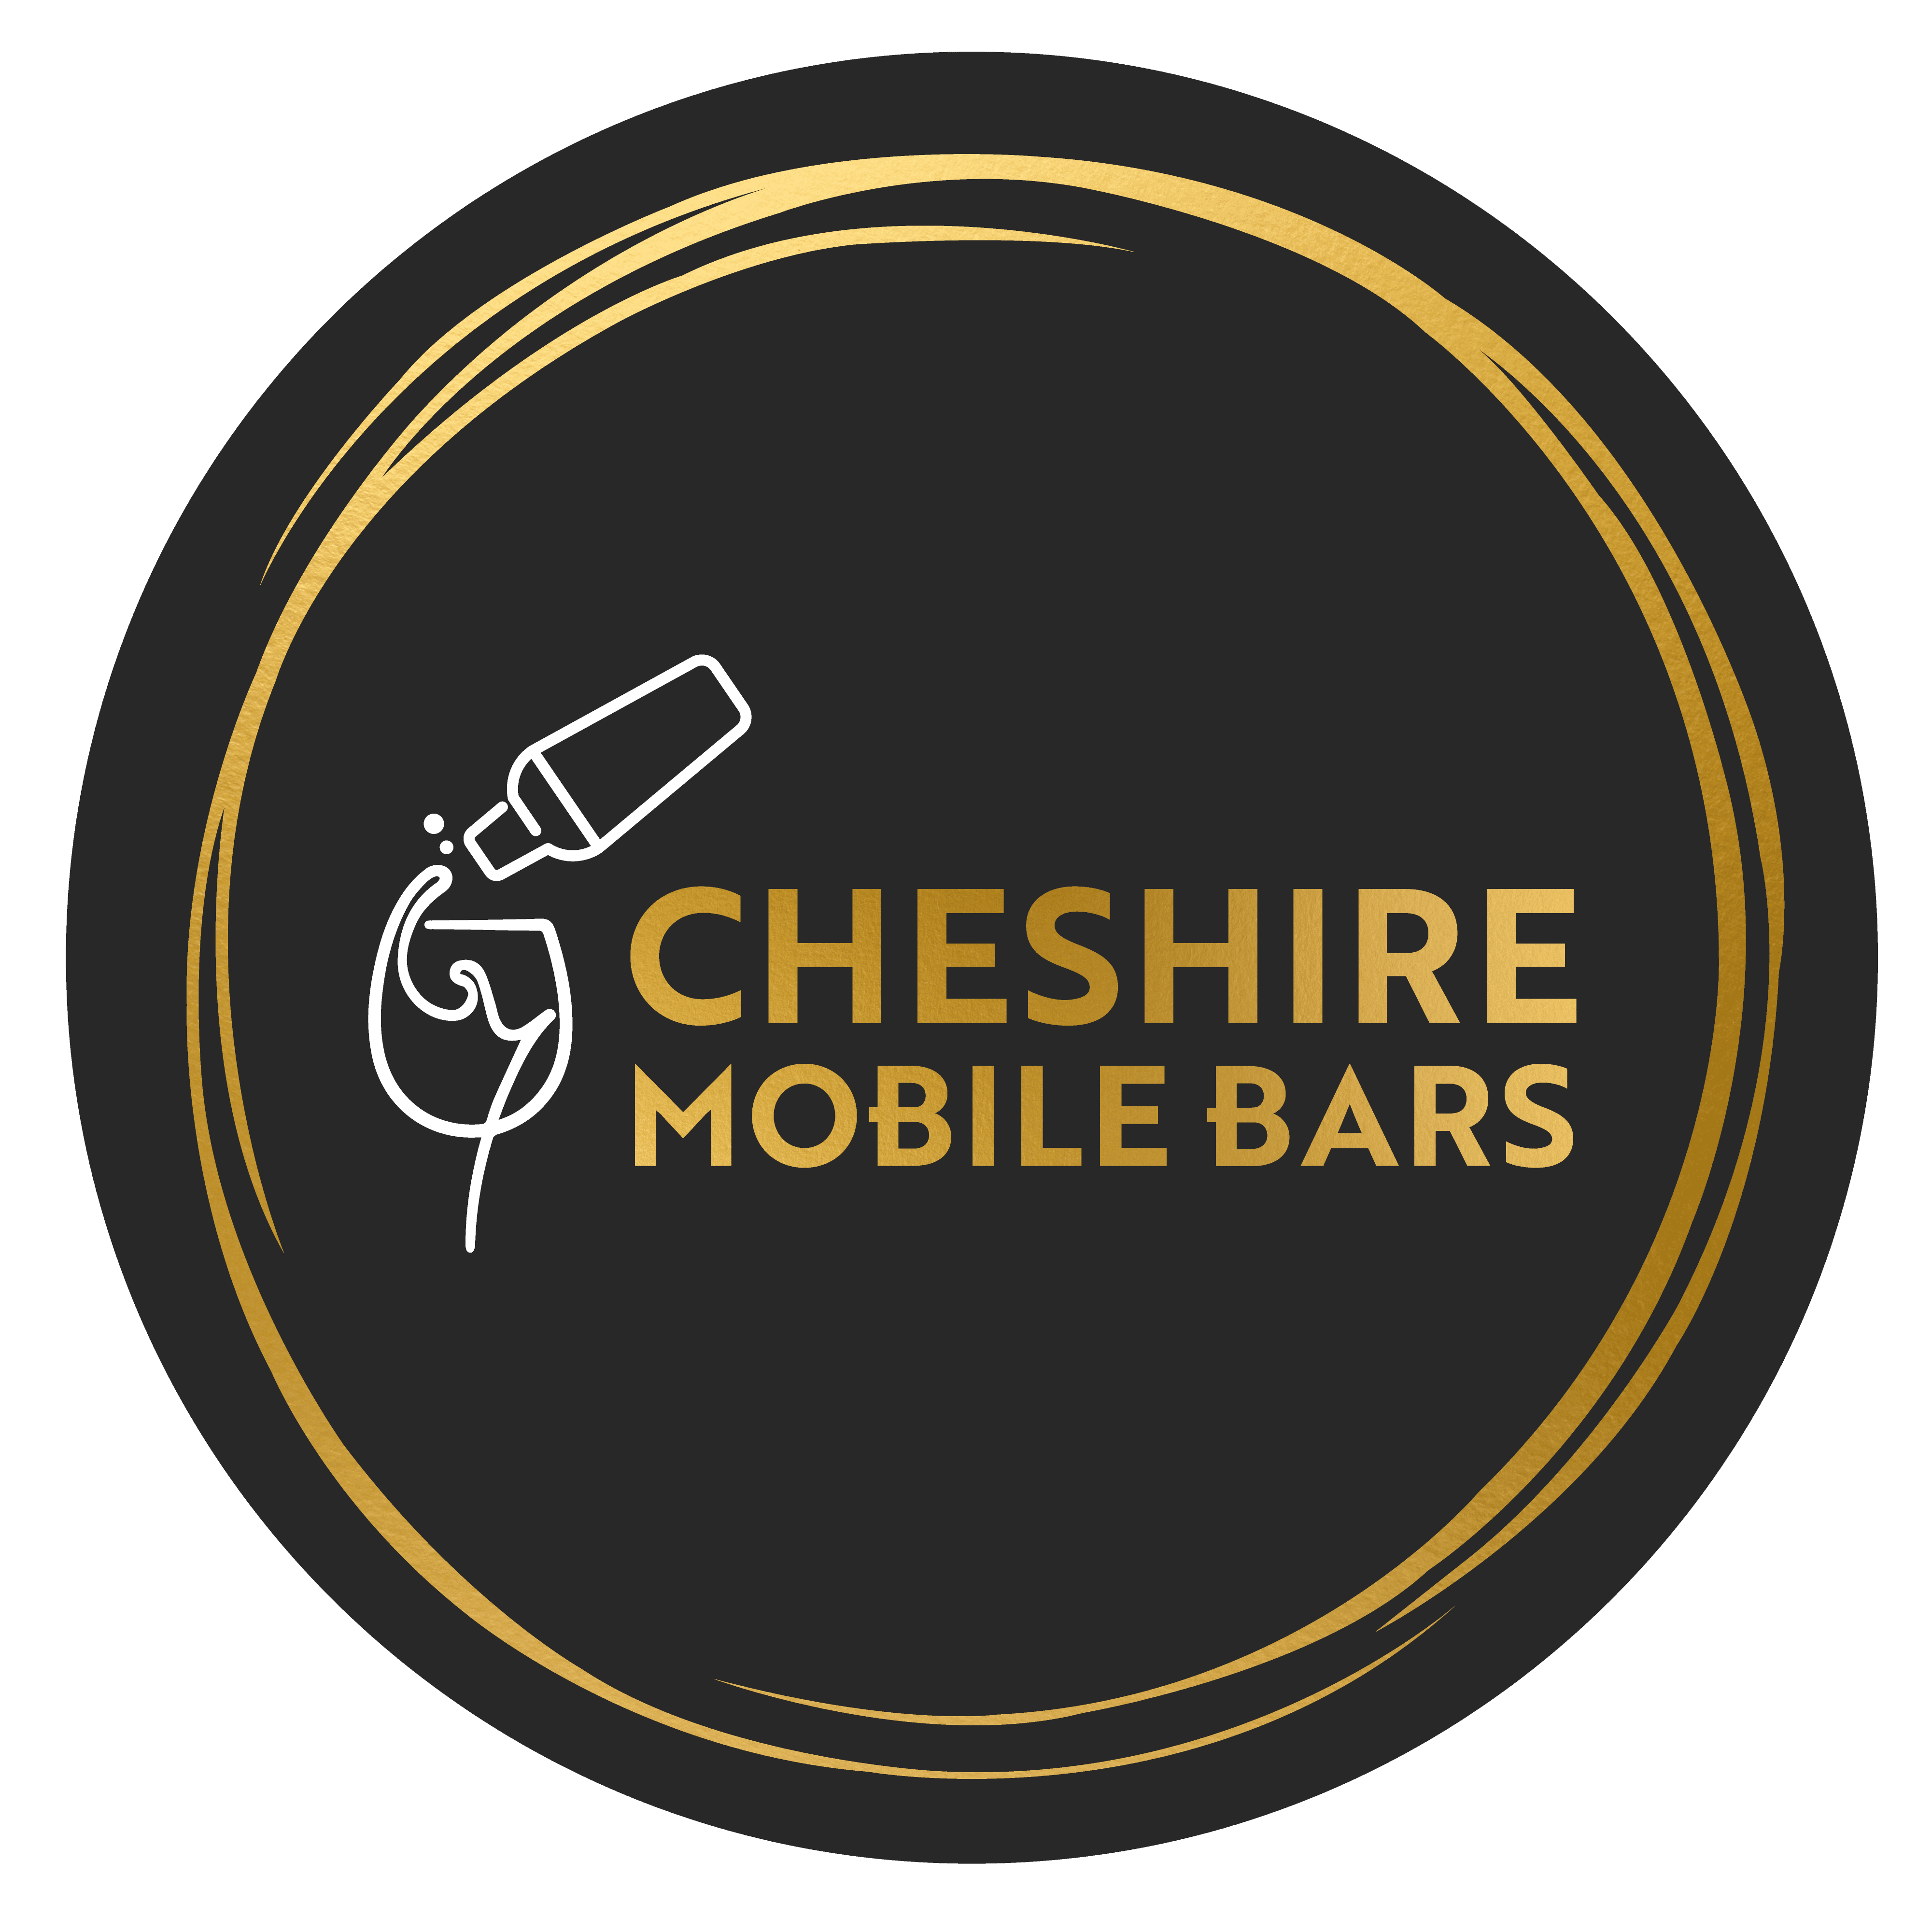 Cheshire Mobile Bars Ltd